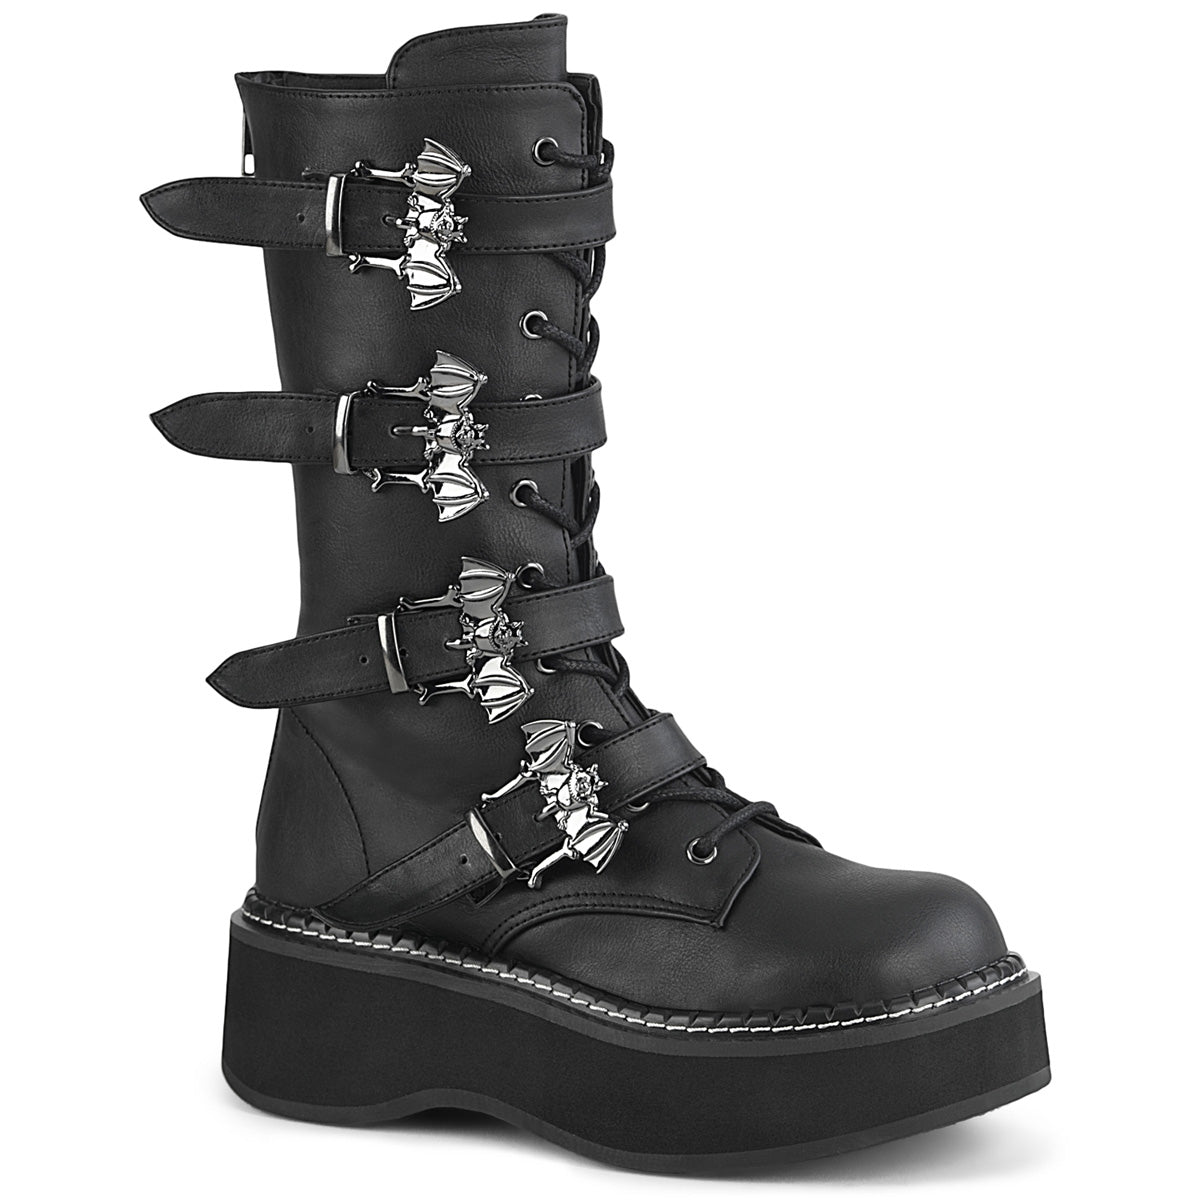 EMILY-322 Alternative Footwear Demonia Women's Mid-Calf & Knee High Boots Blk Vegan Leather